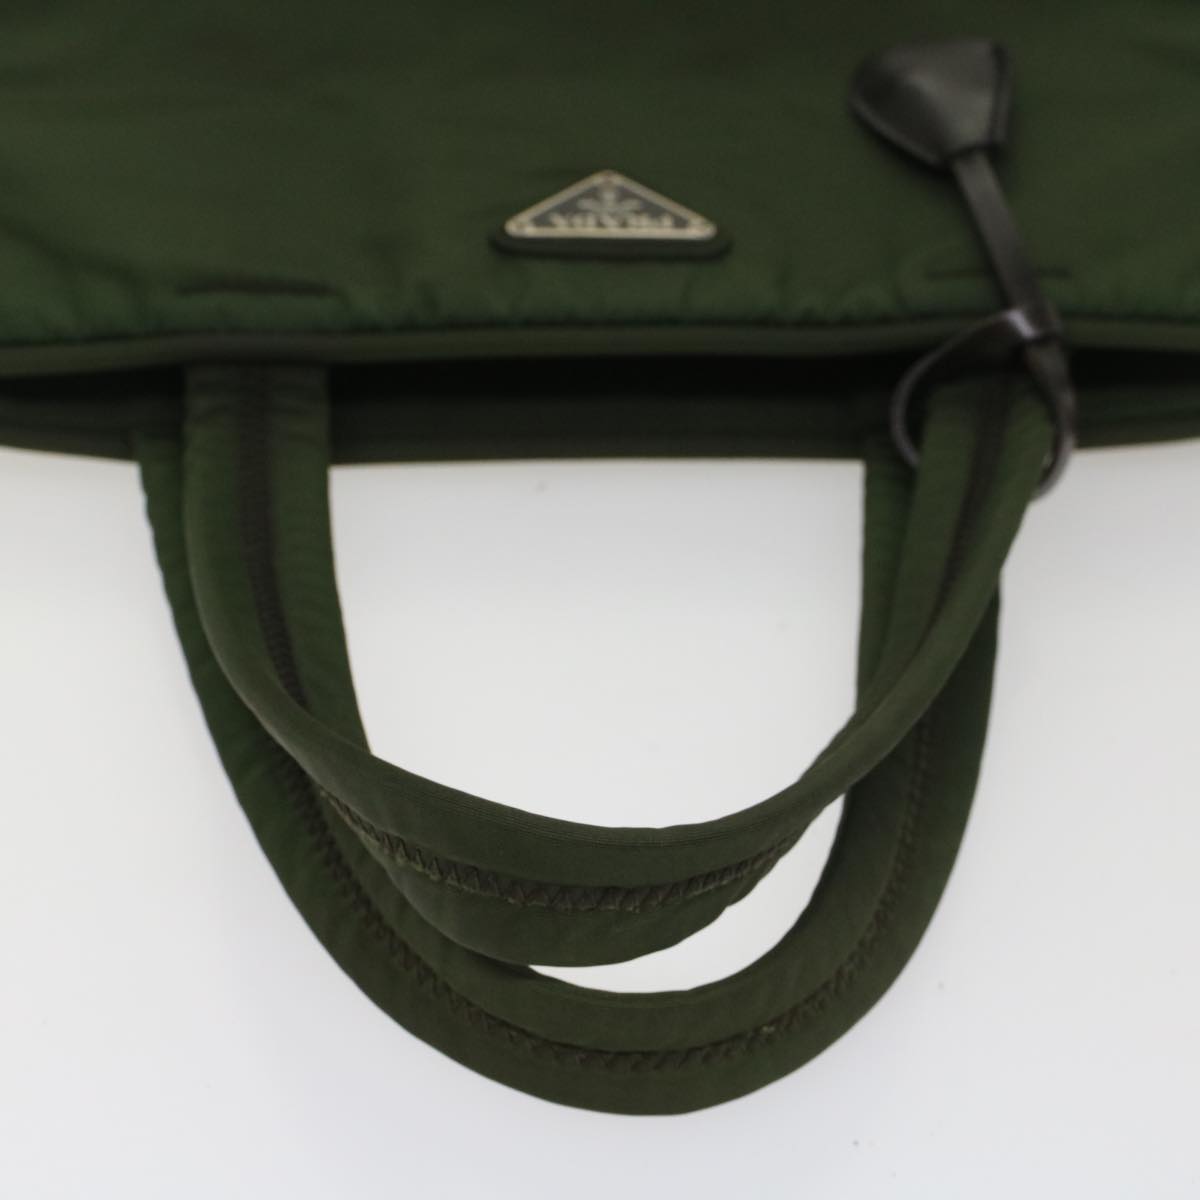 PRADA Tote Bag Nylon Green Auth ac2206